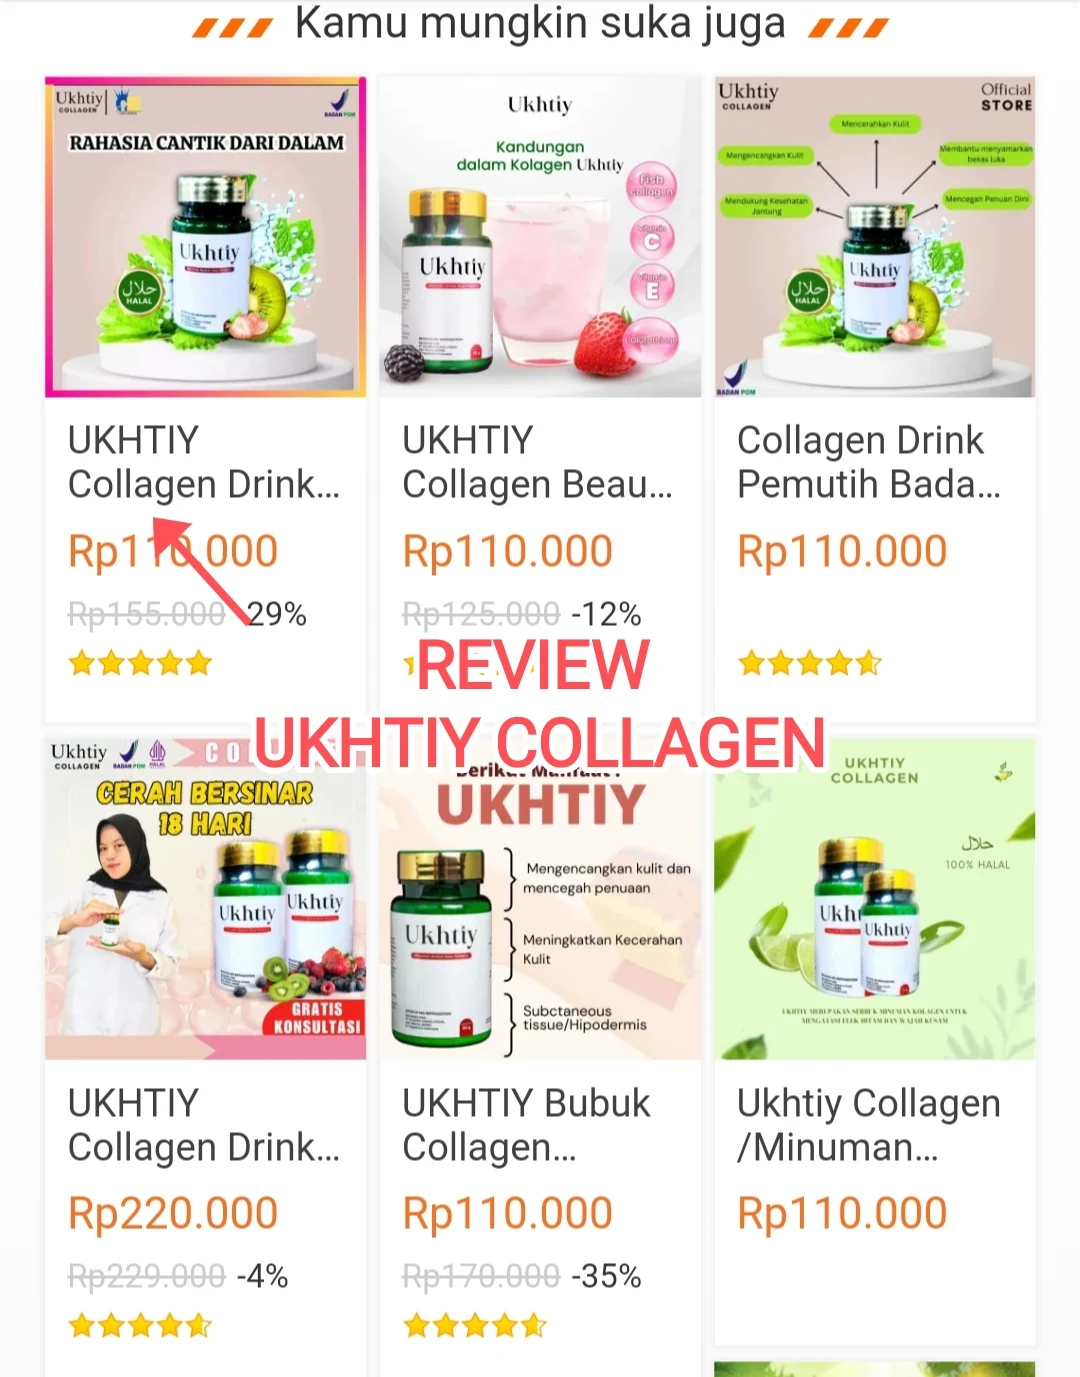 Review ukhtiy collagen